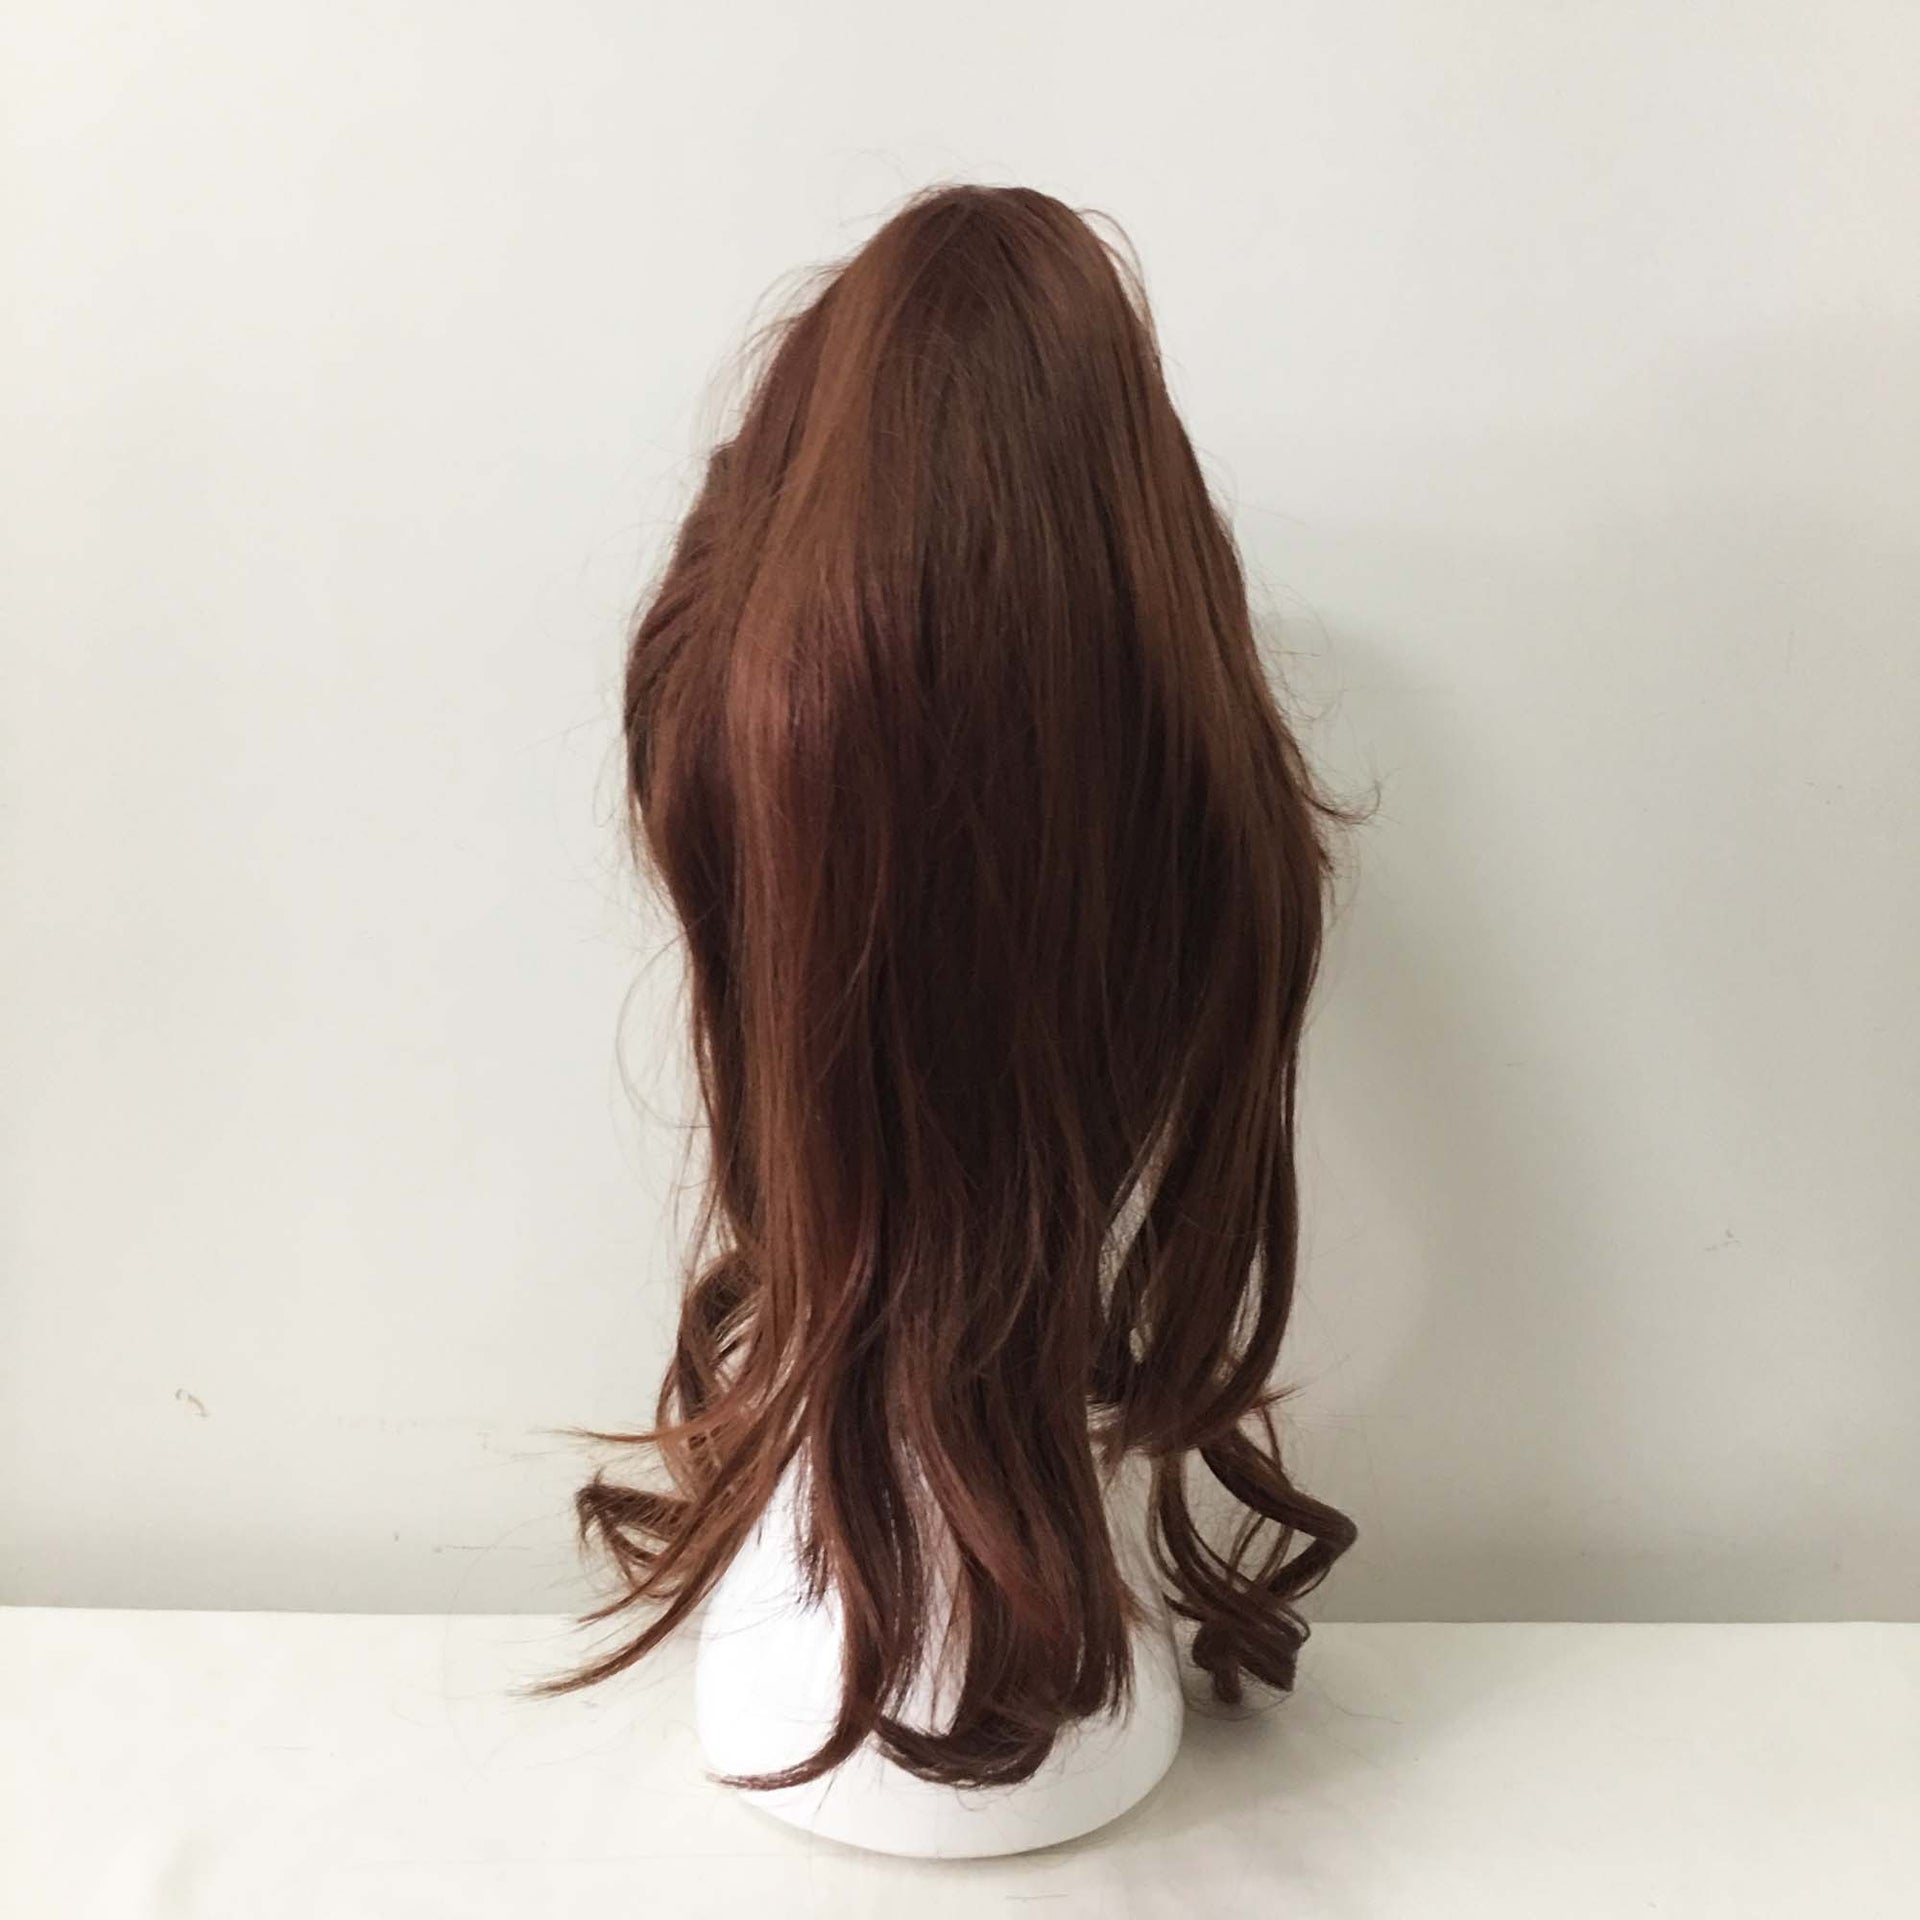 nevermindyrhead Women Dark Brown Long Curly Detachable Ponytail Fringe Bangs Cosplay Wig